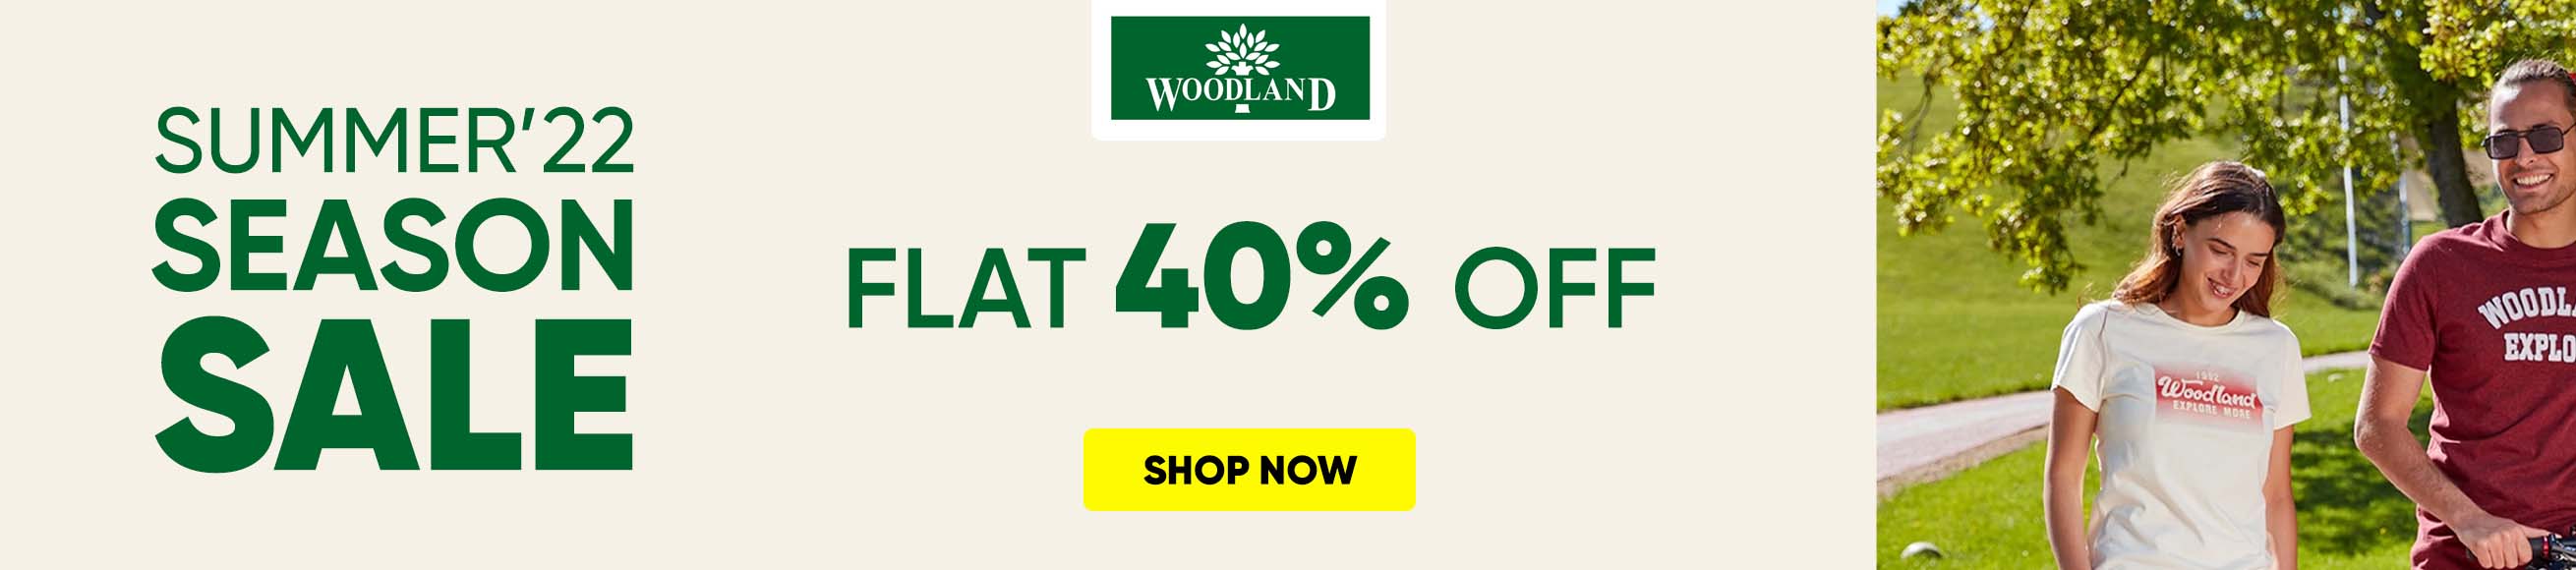 woodland branding